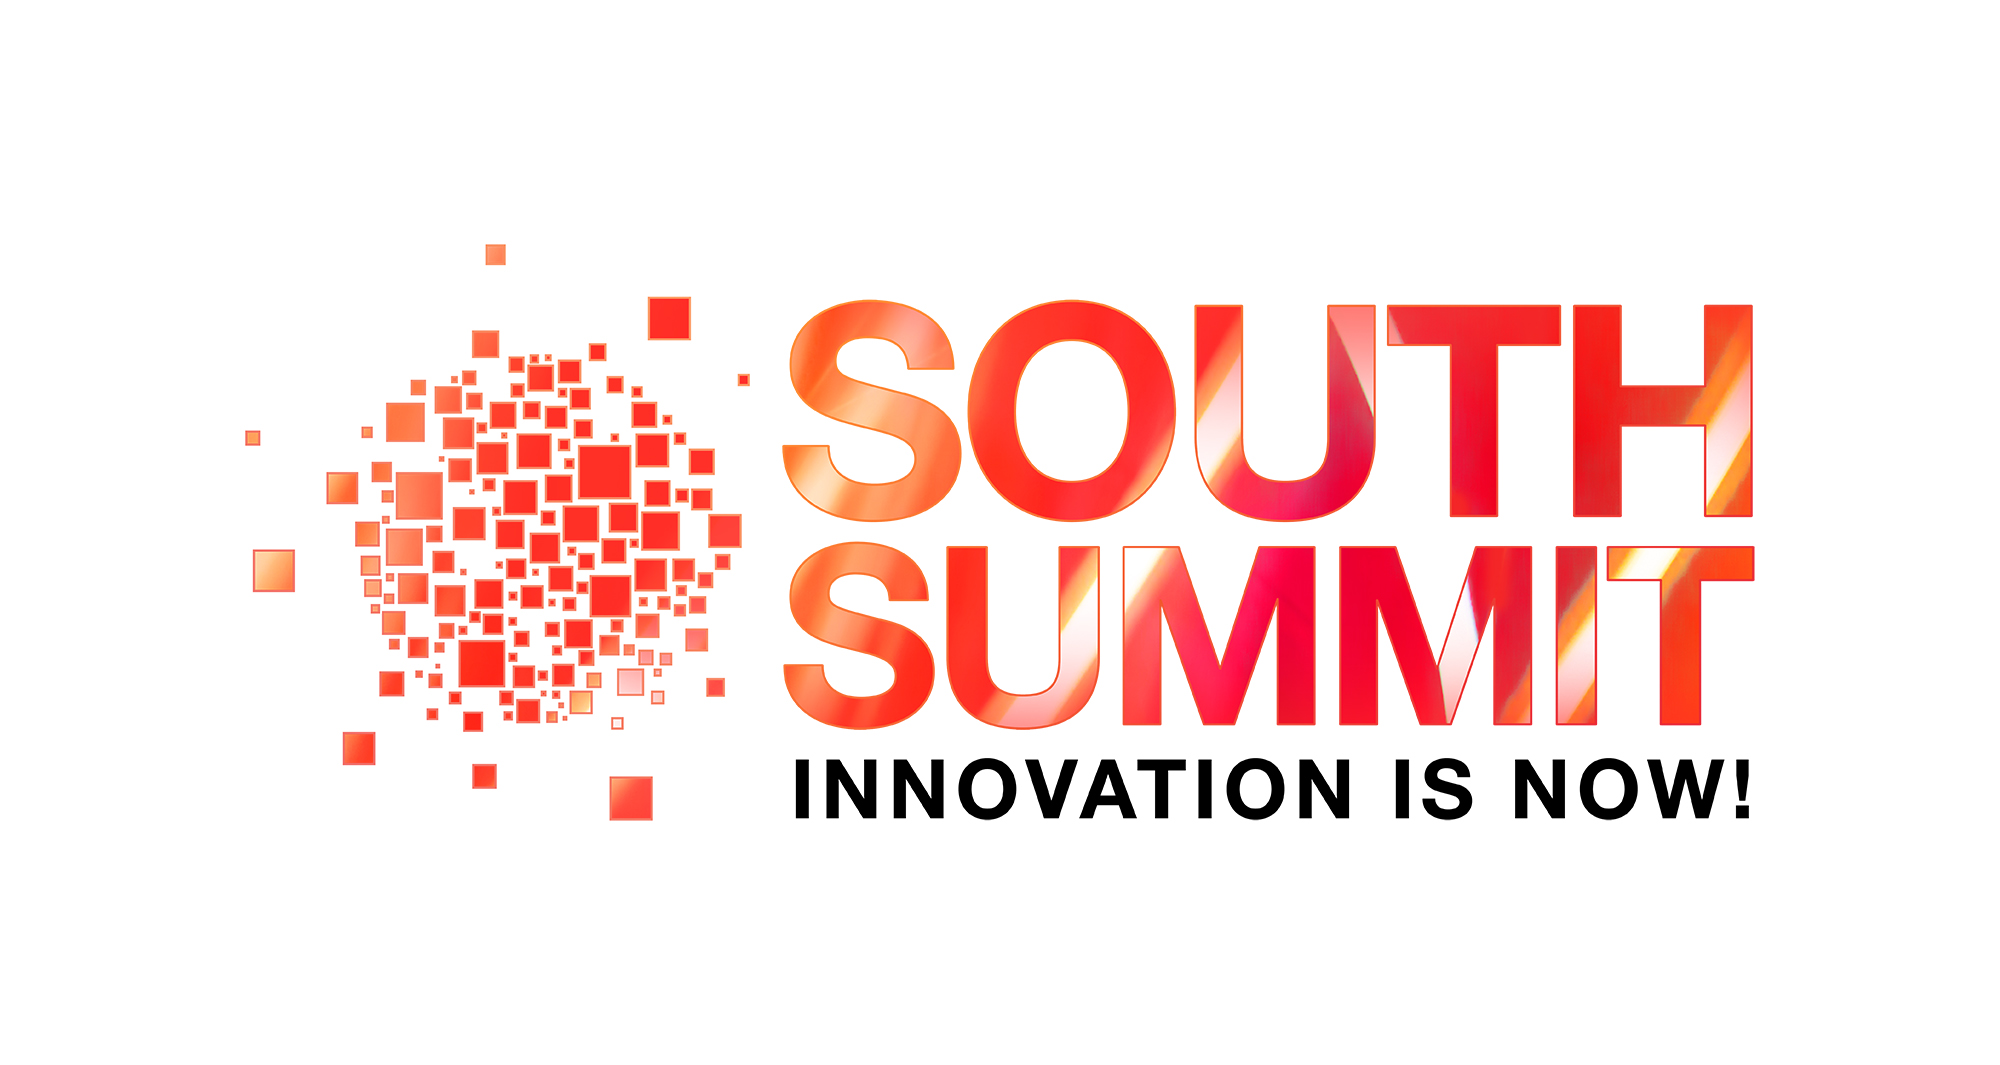 South Summit 2016